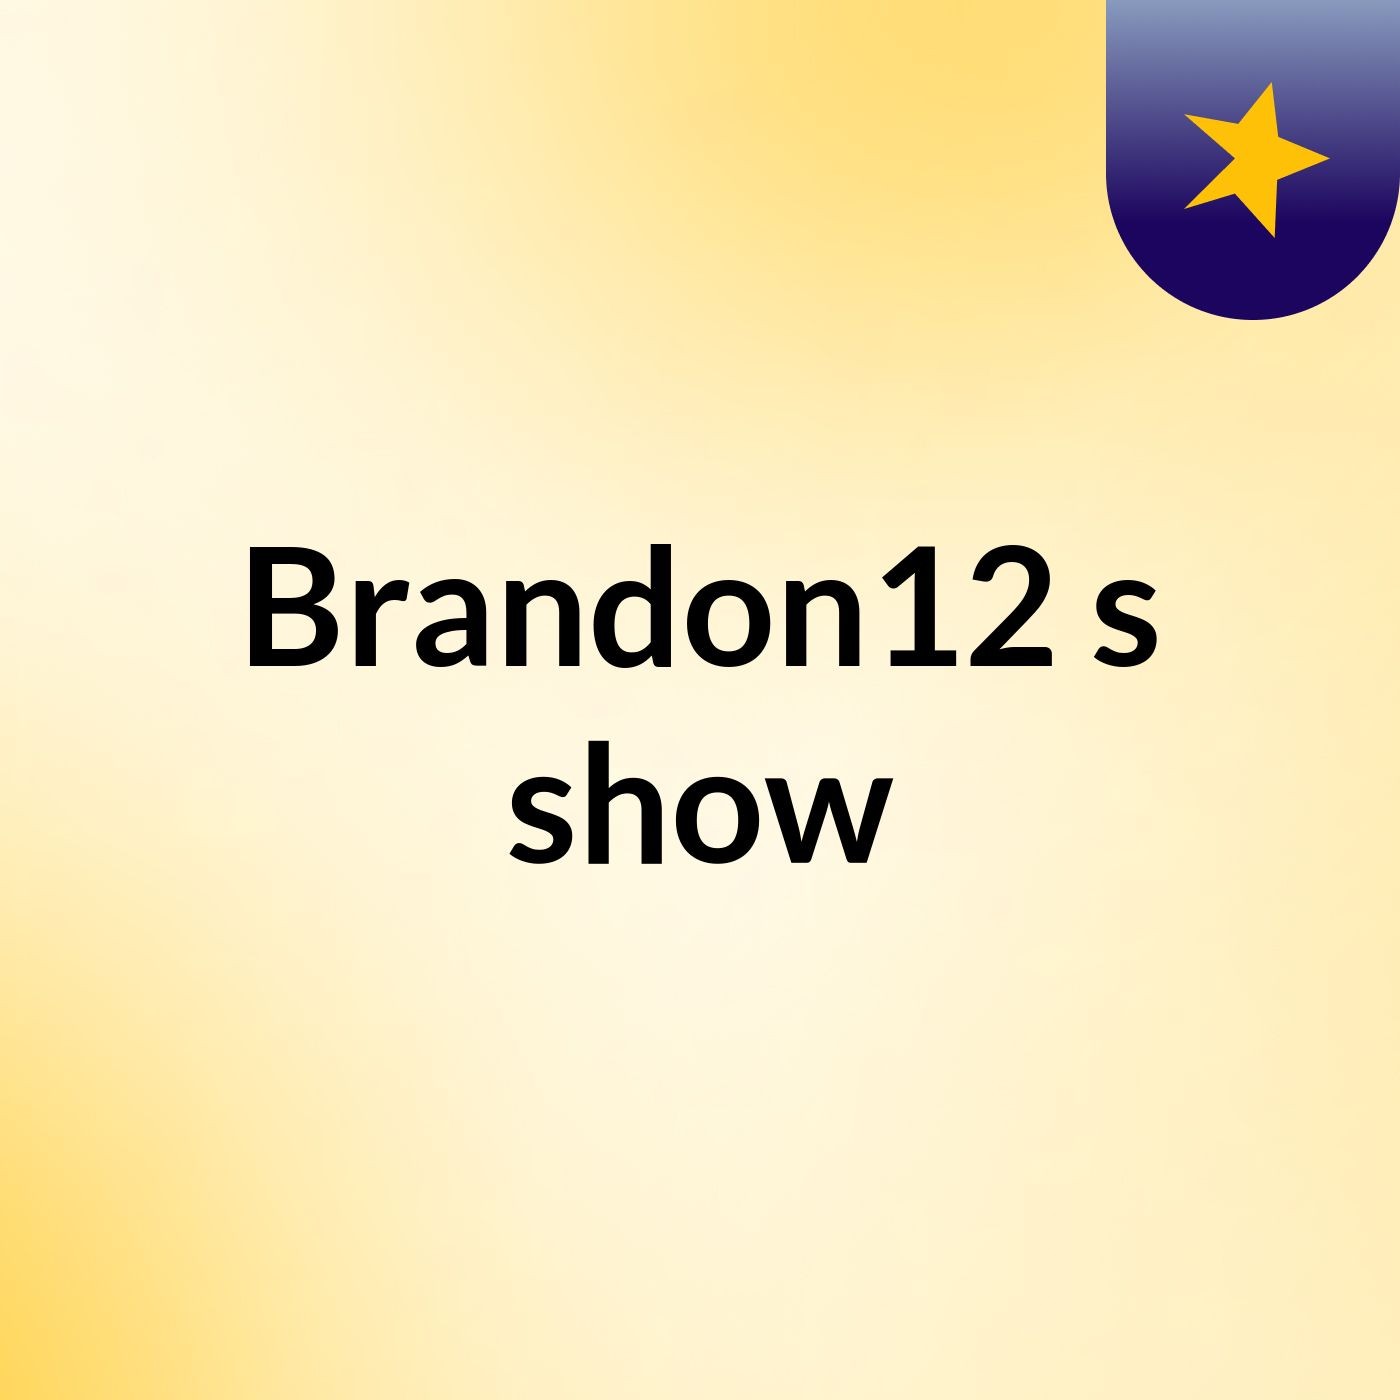 Brandon12's show